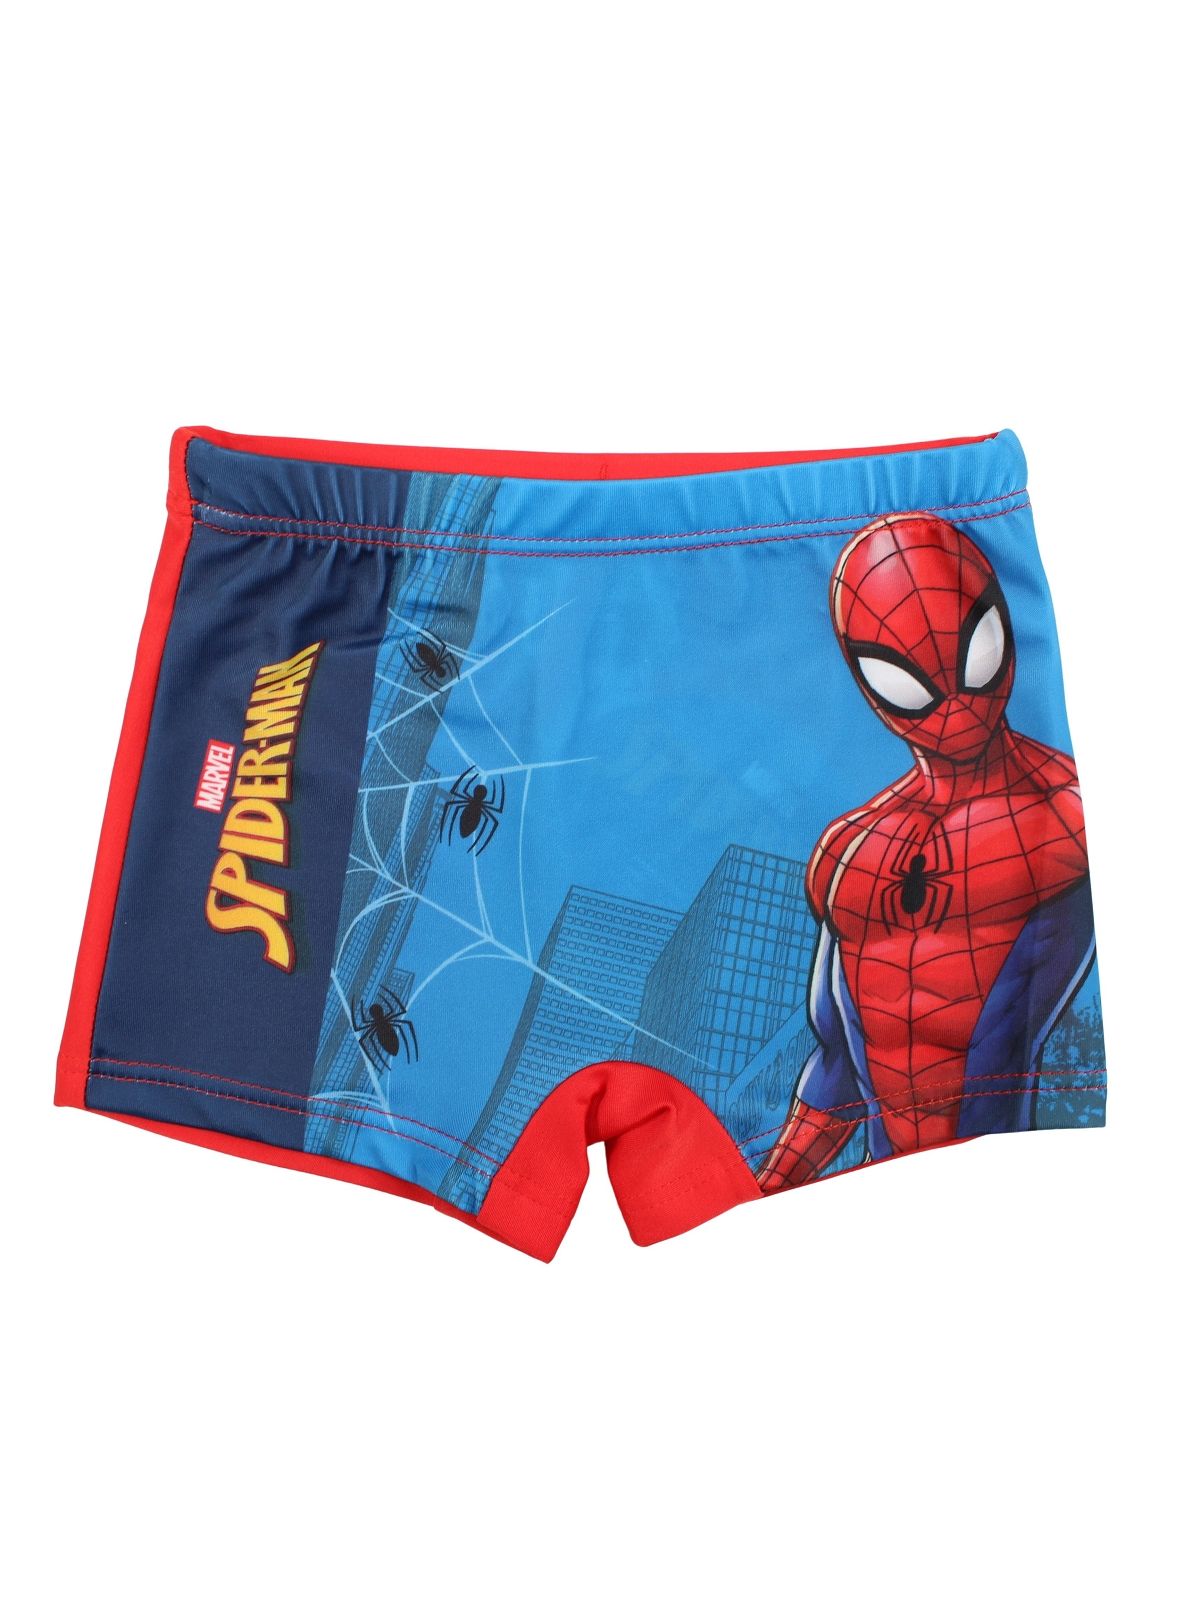 Spiderman swim trunks.